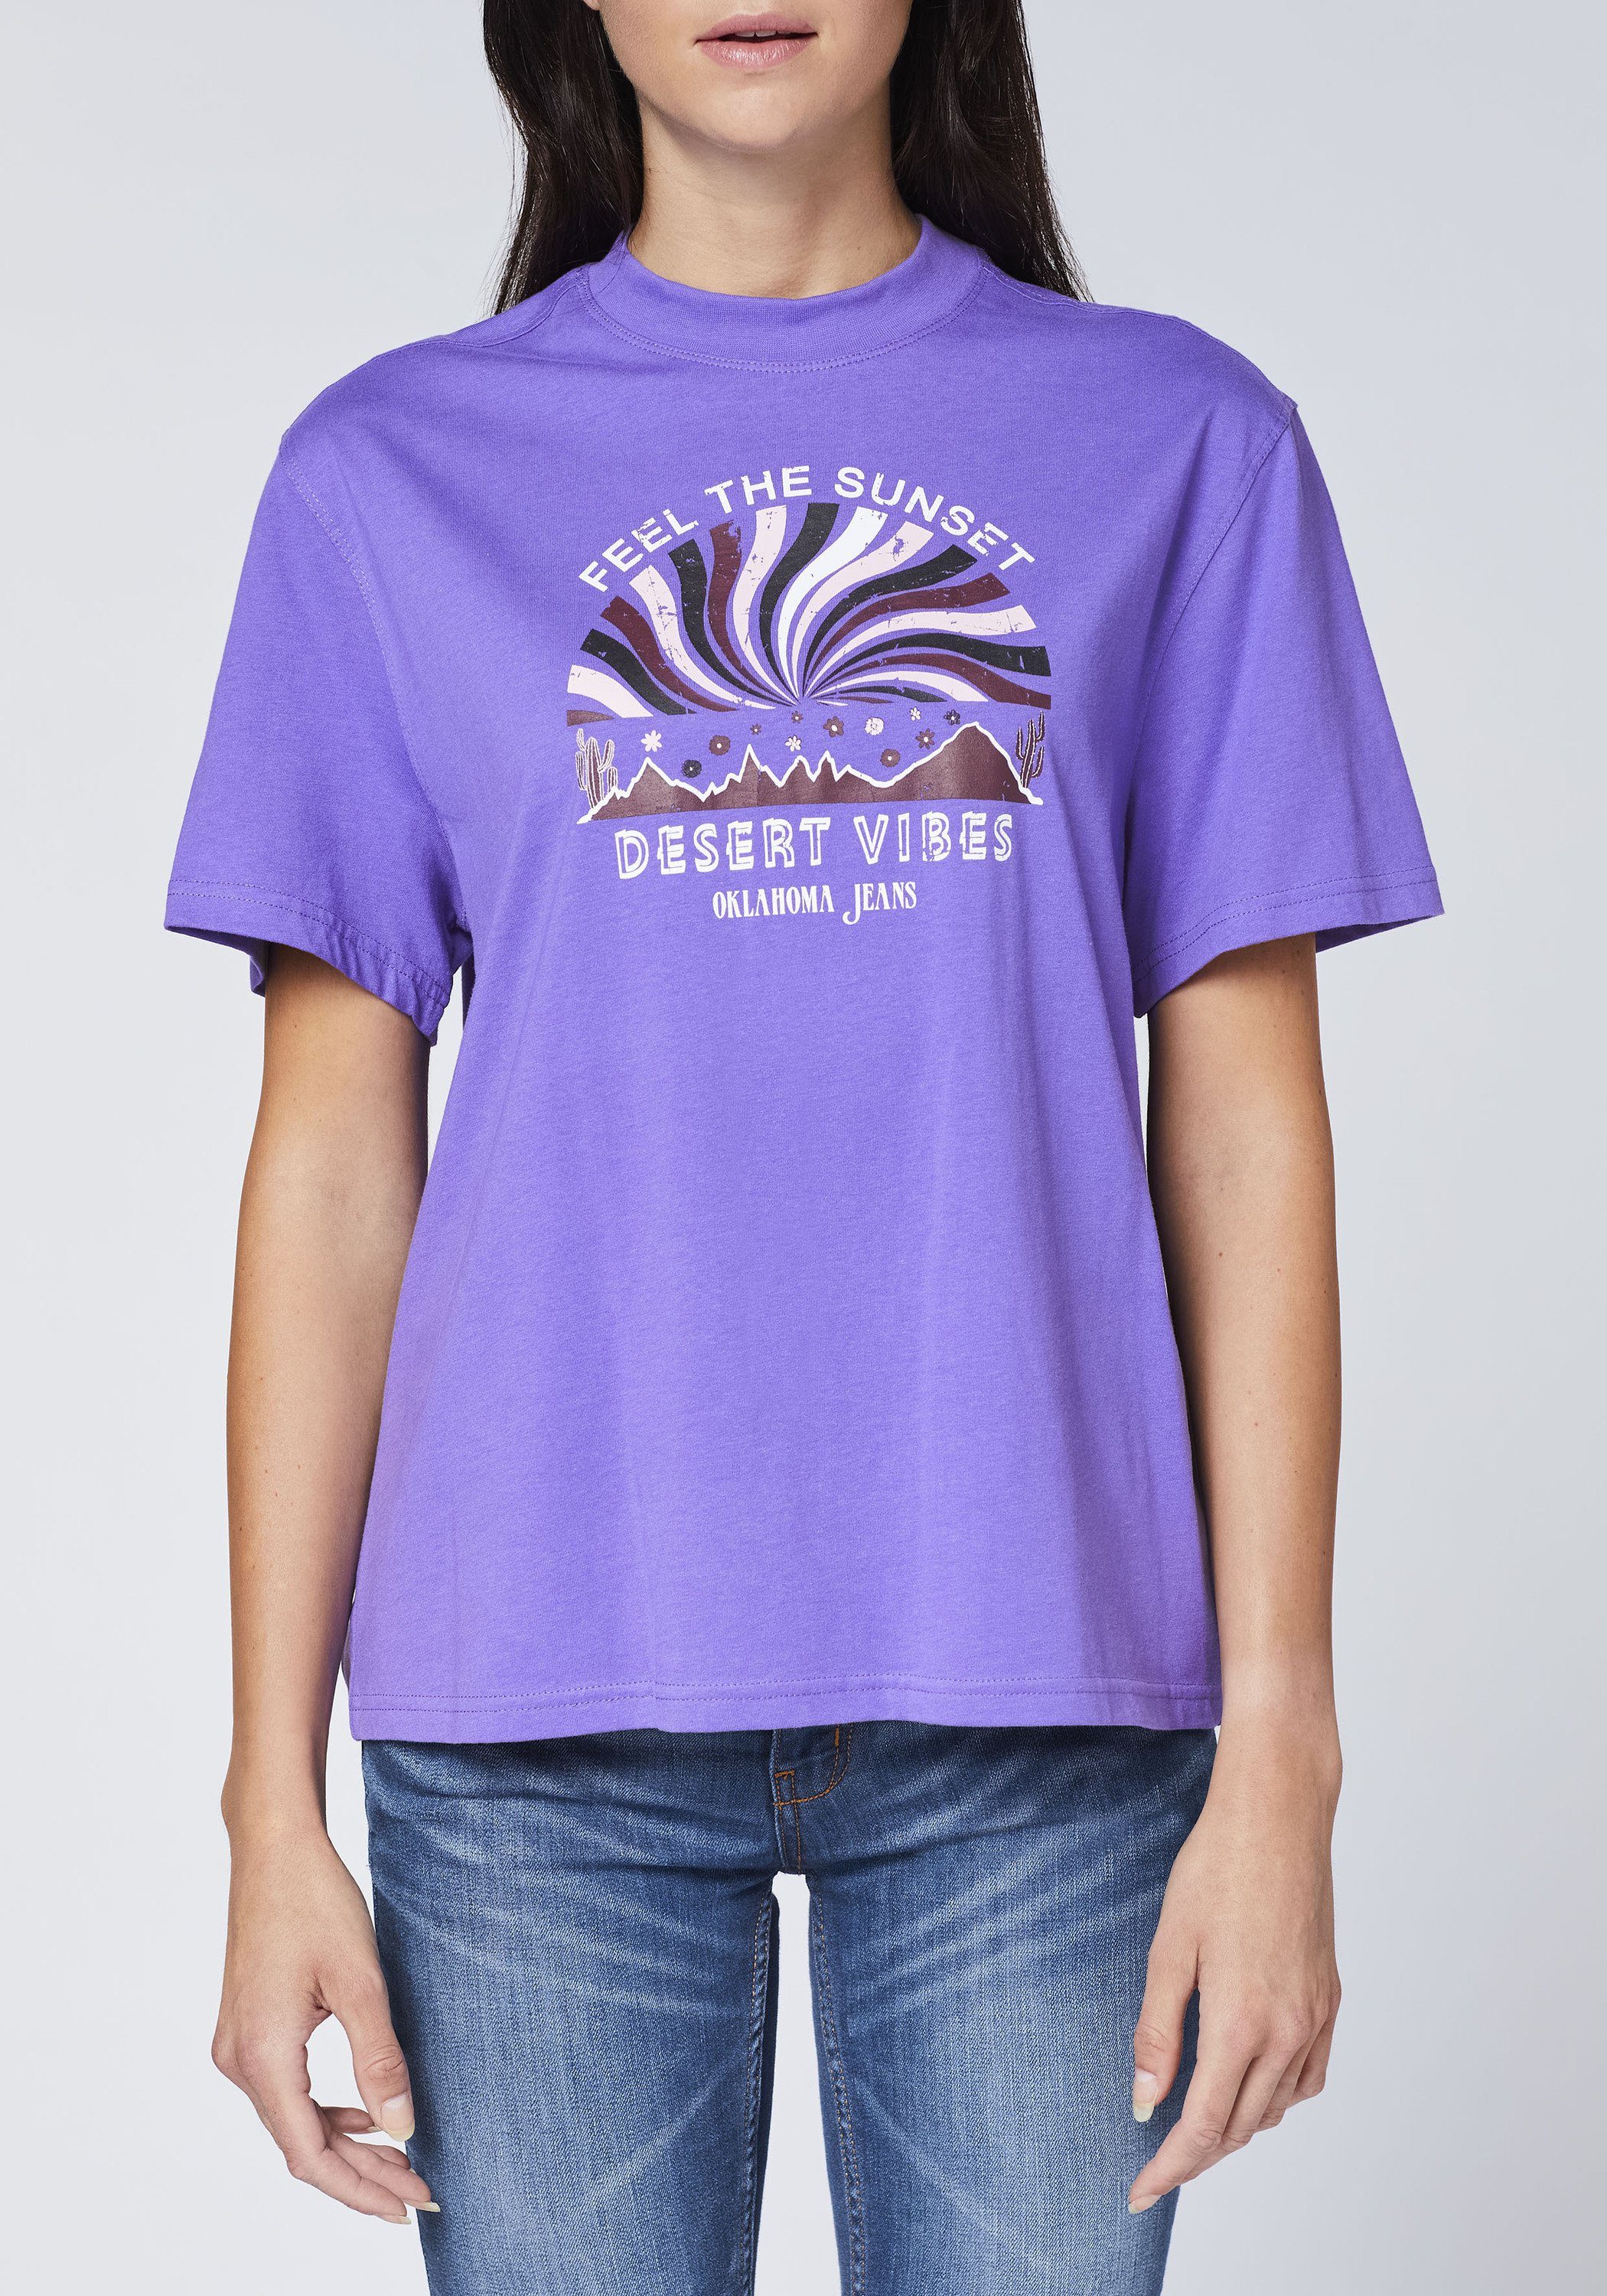 Jeans Oklahoma Flower Desert-Motiv Passion mit 18-3737 Print-Shirt